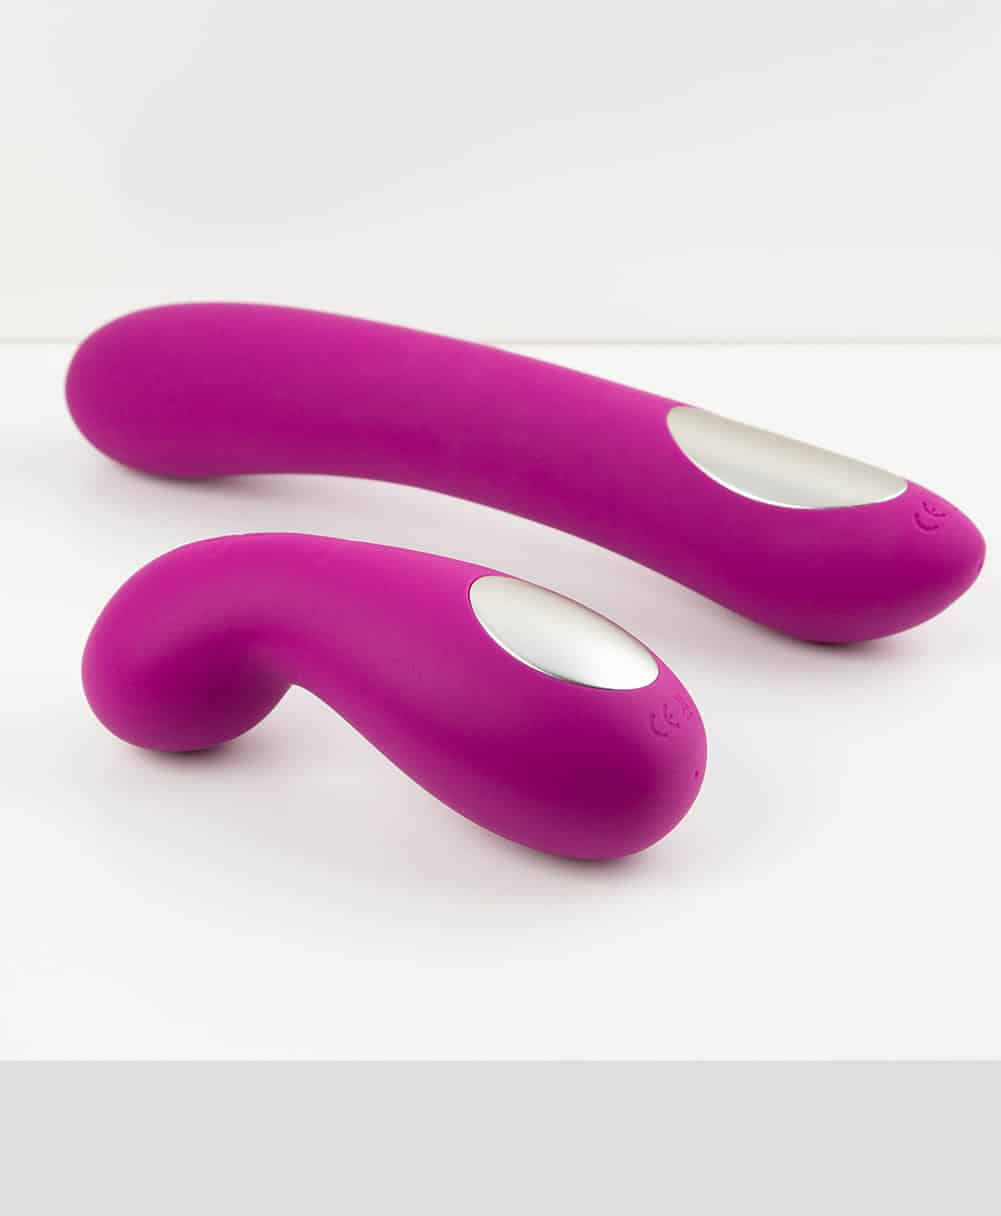 The Cliona launch showcases two vibrant purple vibrators on a minimalist white surface.